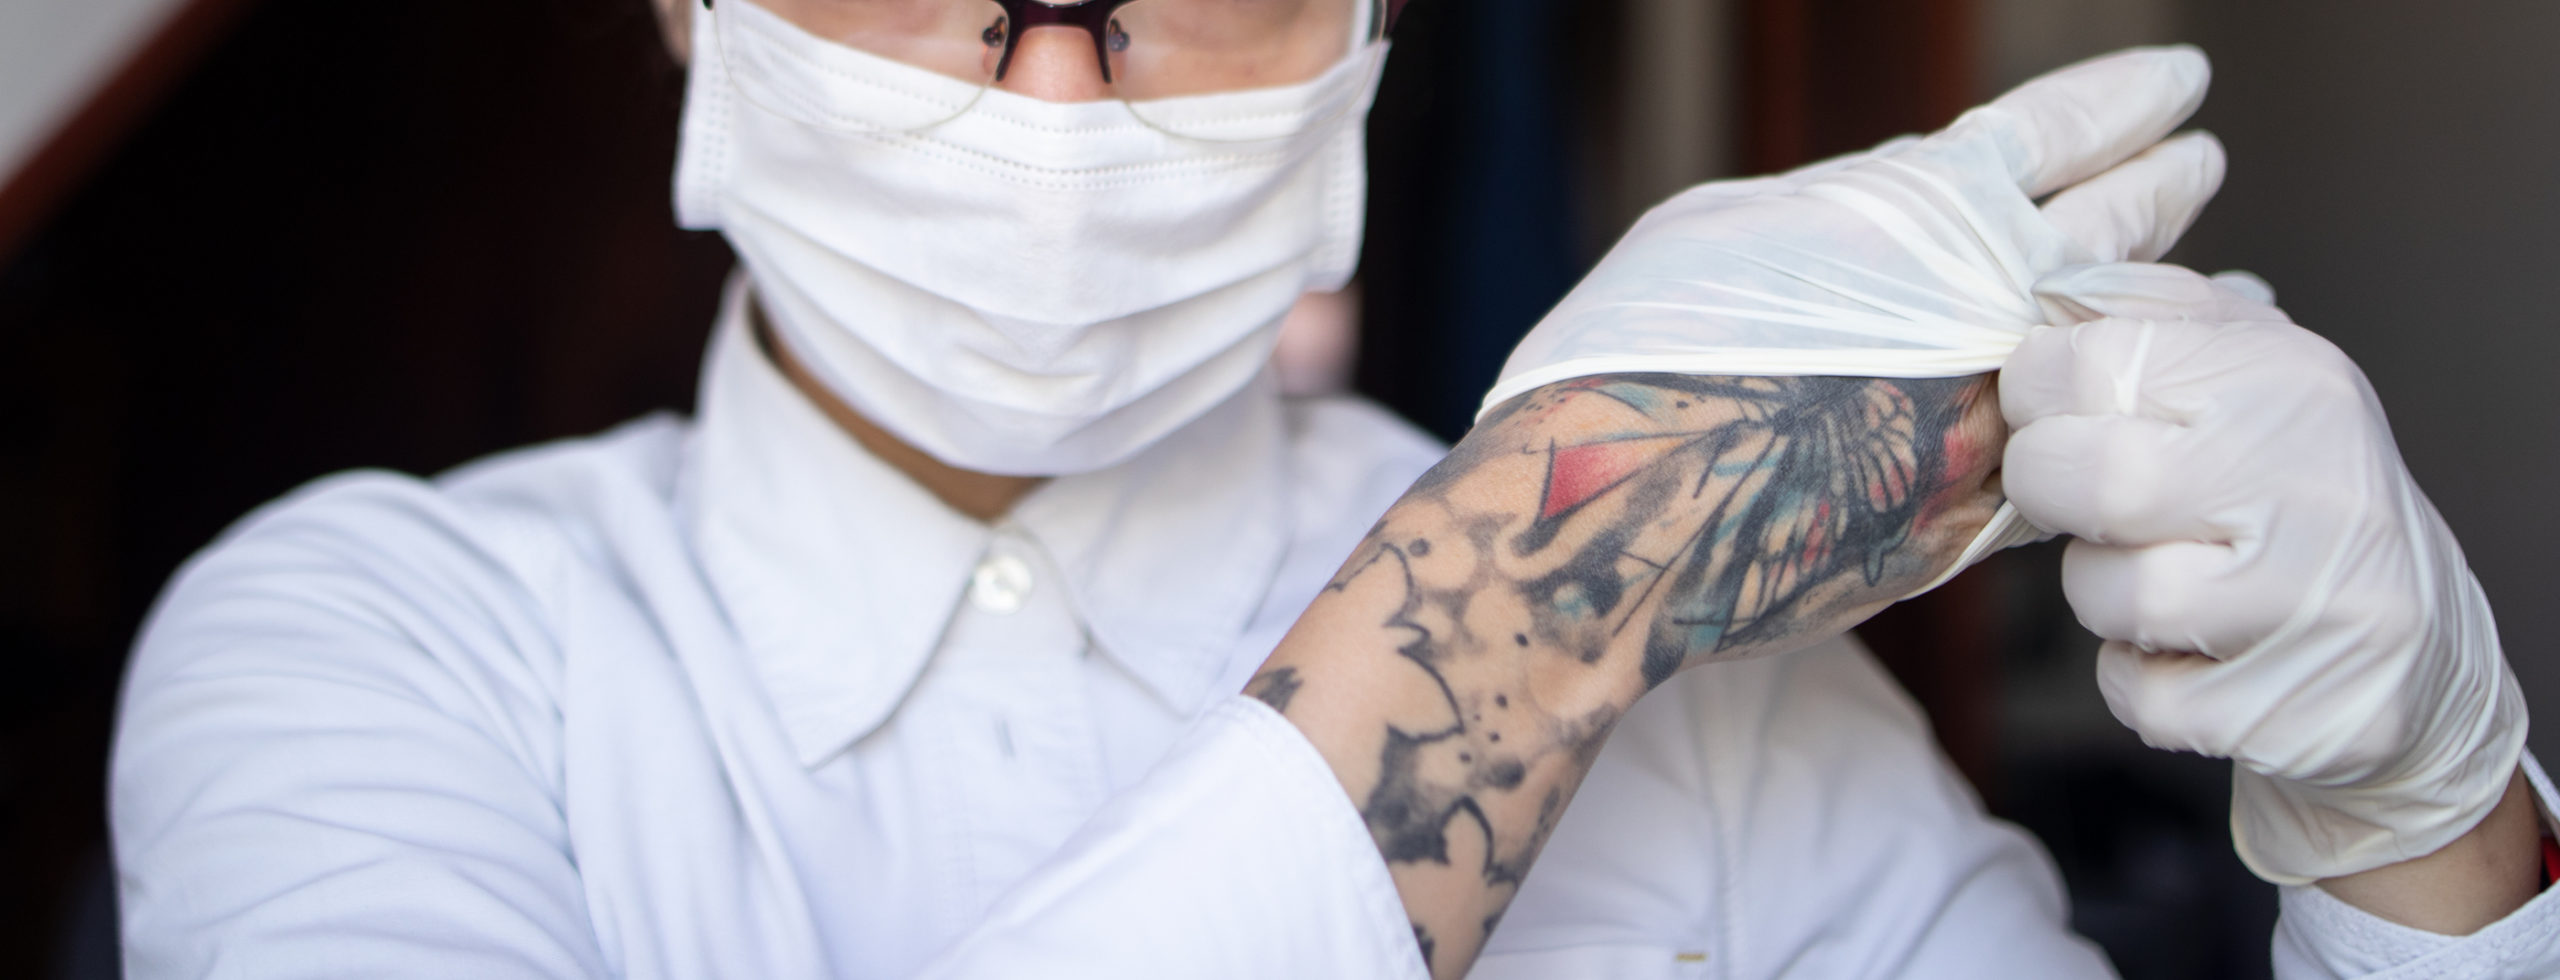 10 Ideas for Nurse Tattoos | Incredible Health